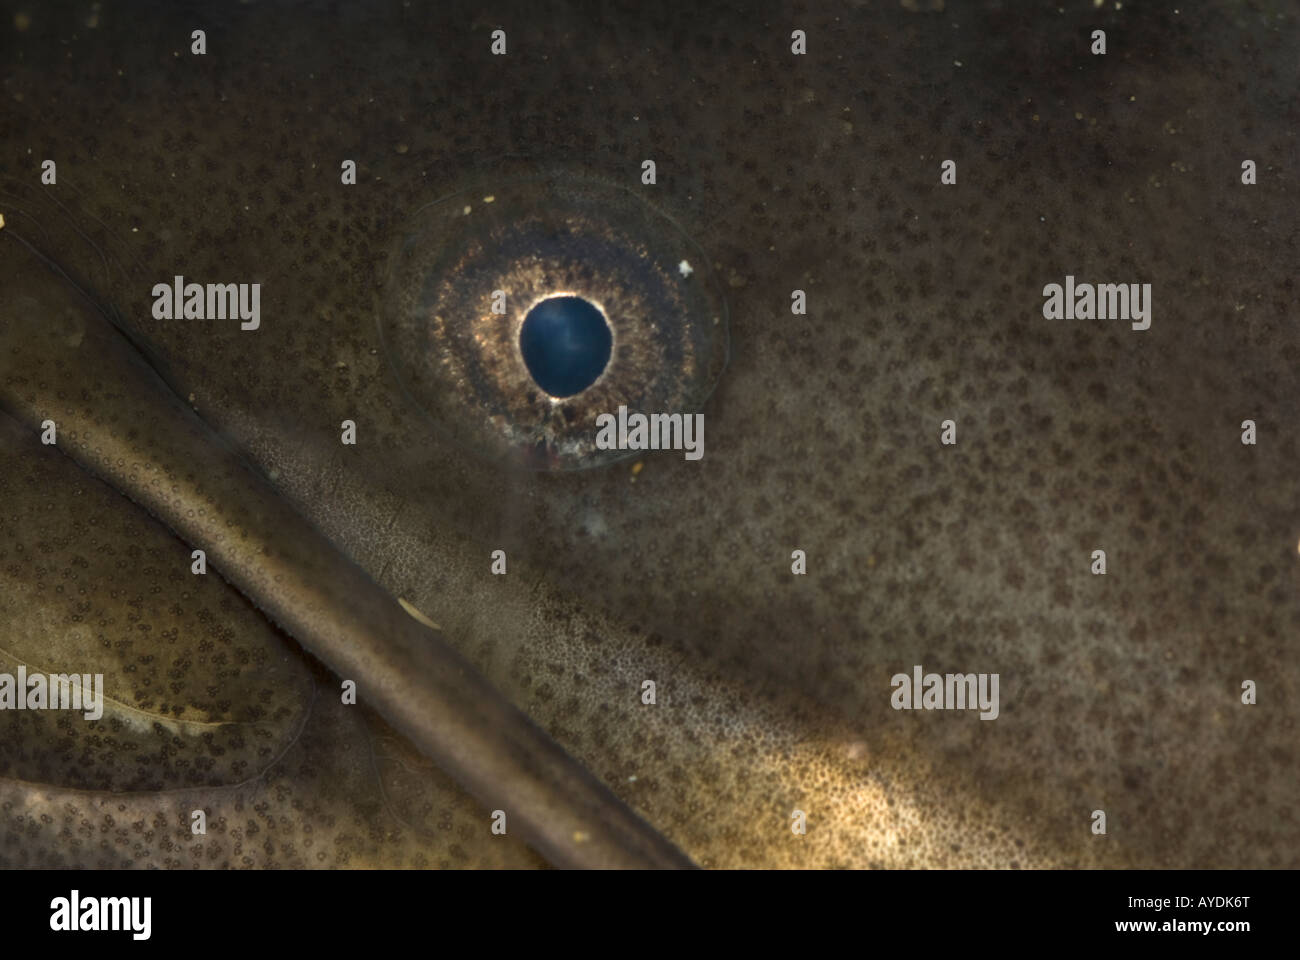 European catfish, Silurus glanis, close-up Stock Photo